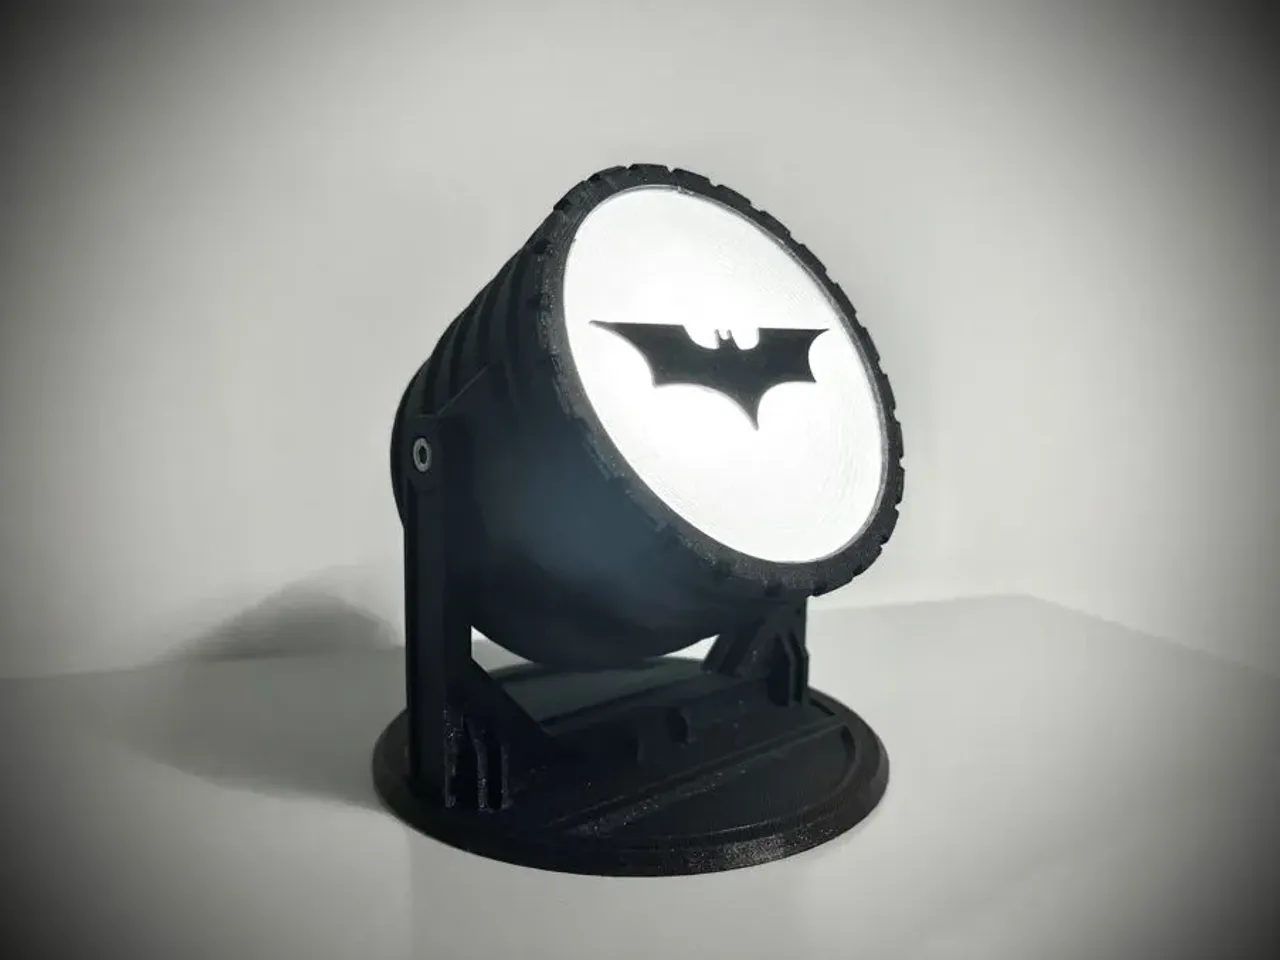 Bat Signal Collection by V3Design